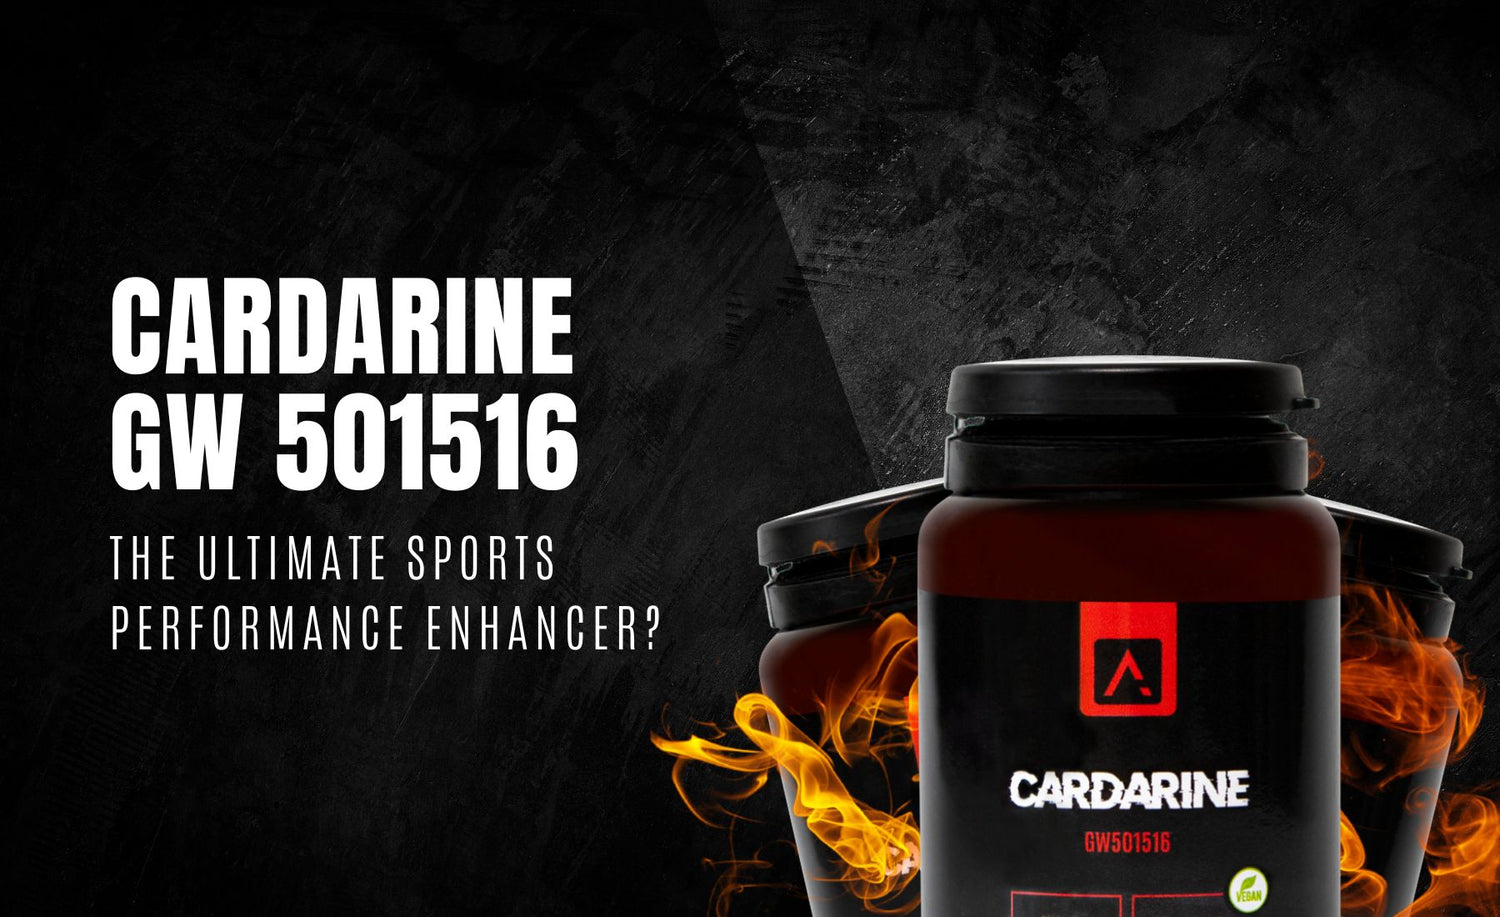 Cardarine: The Ultimate Sports Performance Enhancer?